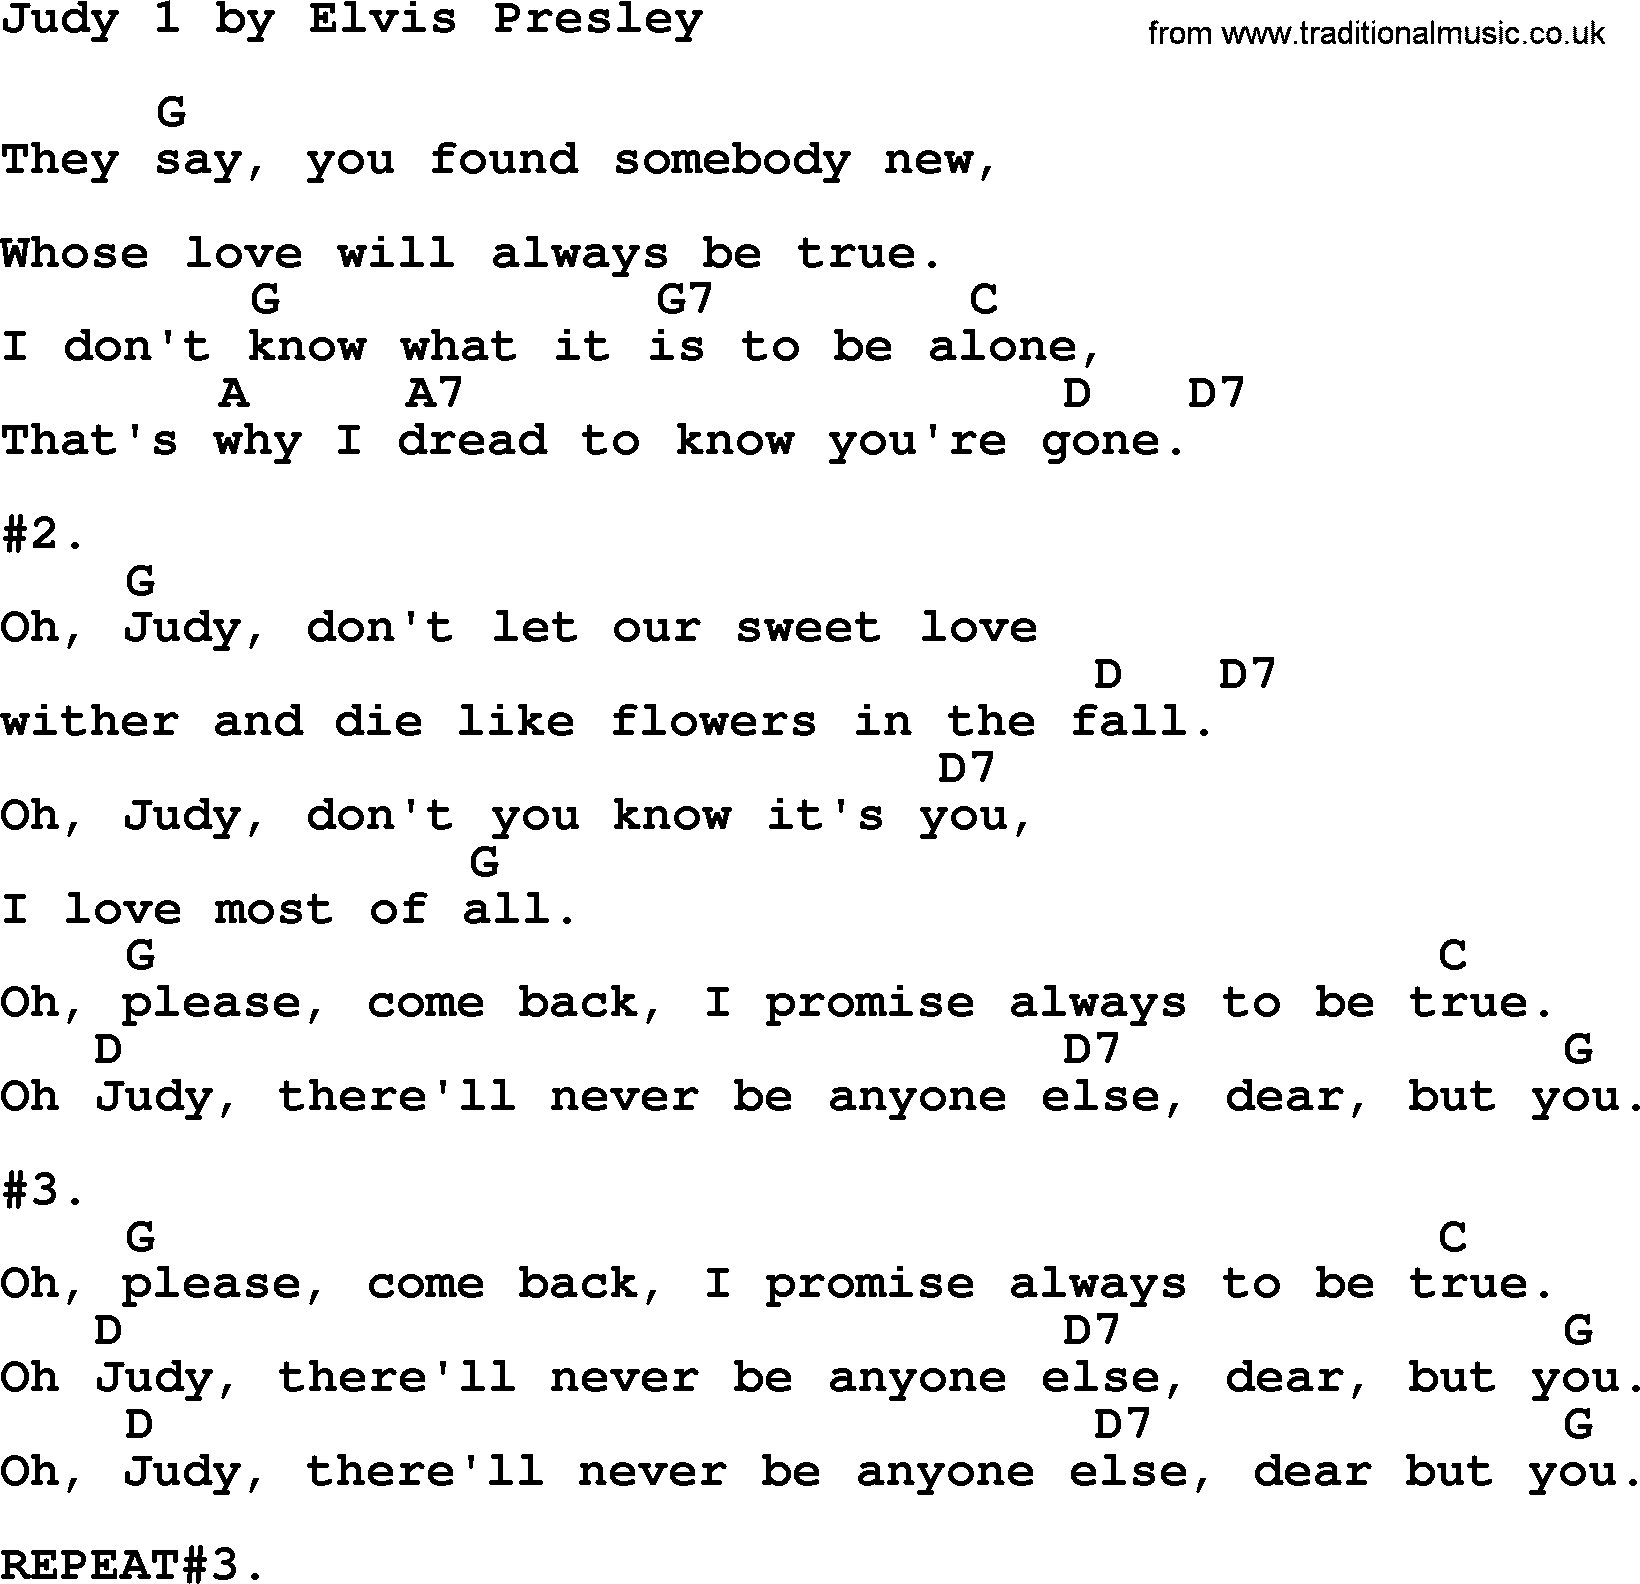 Elvis Presley song: Judy, lyrics and chords